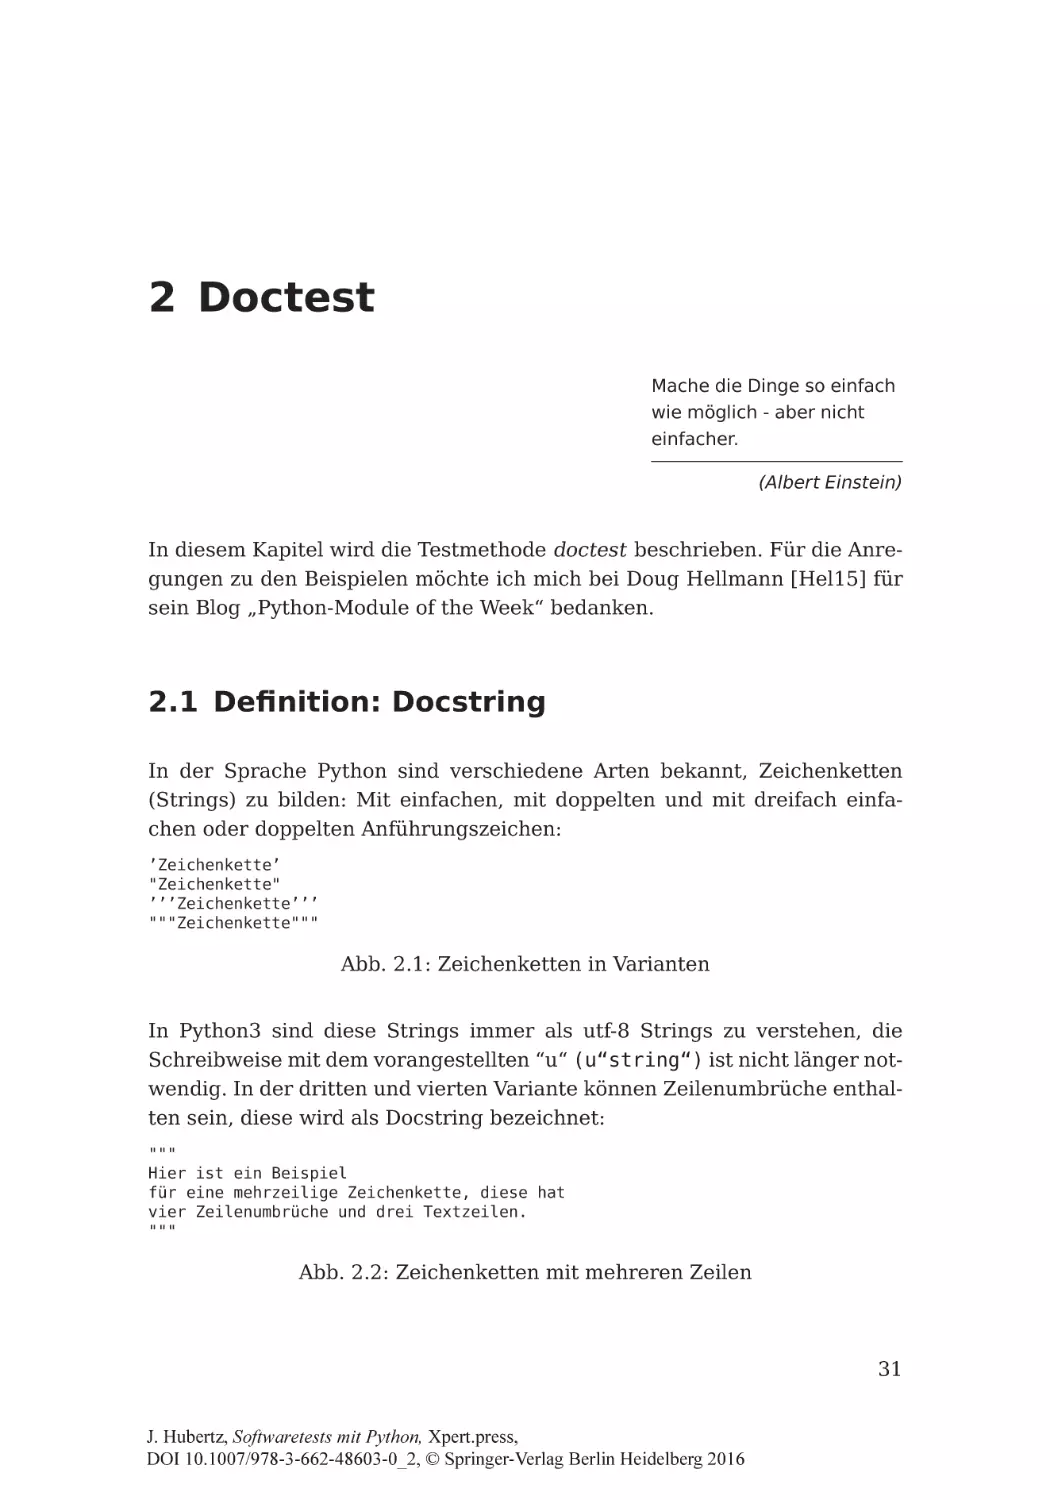 2 Doctest
2.1 Definition